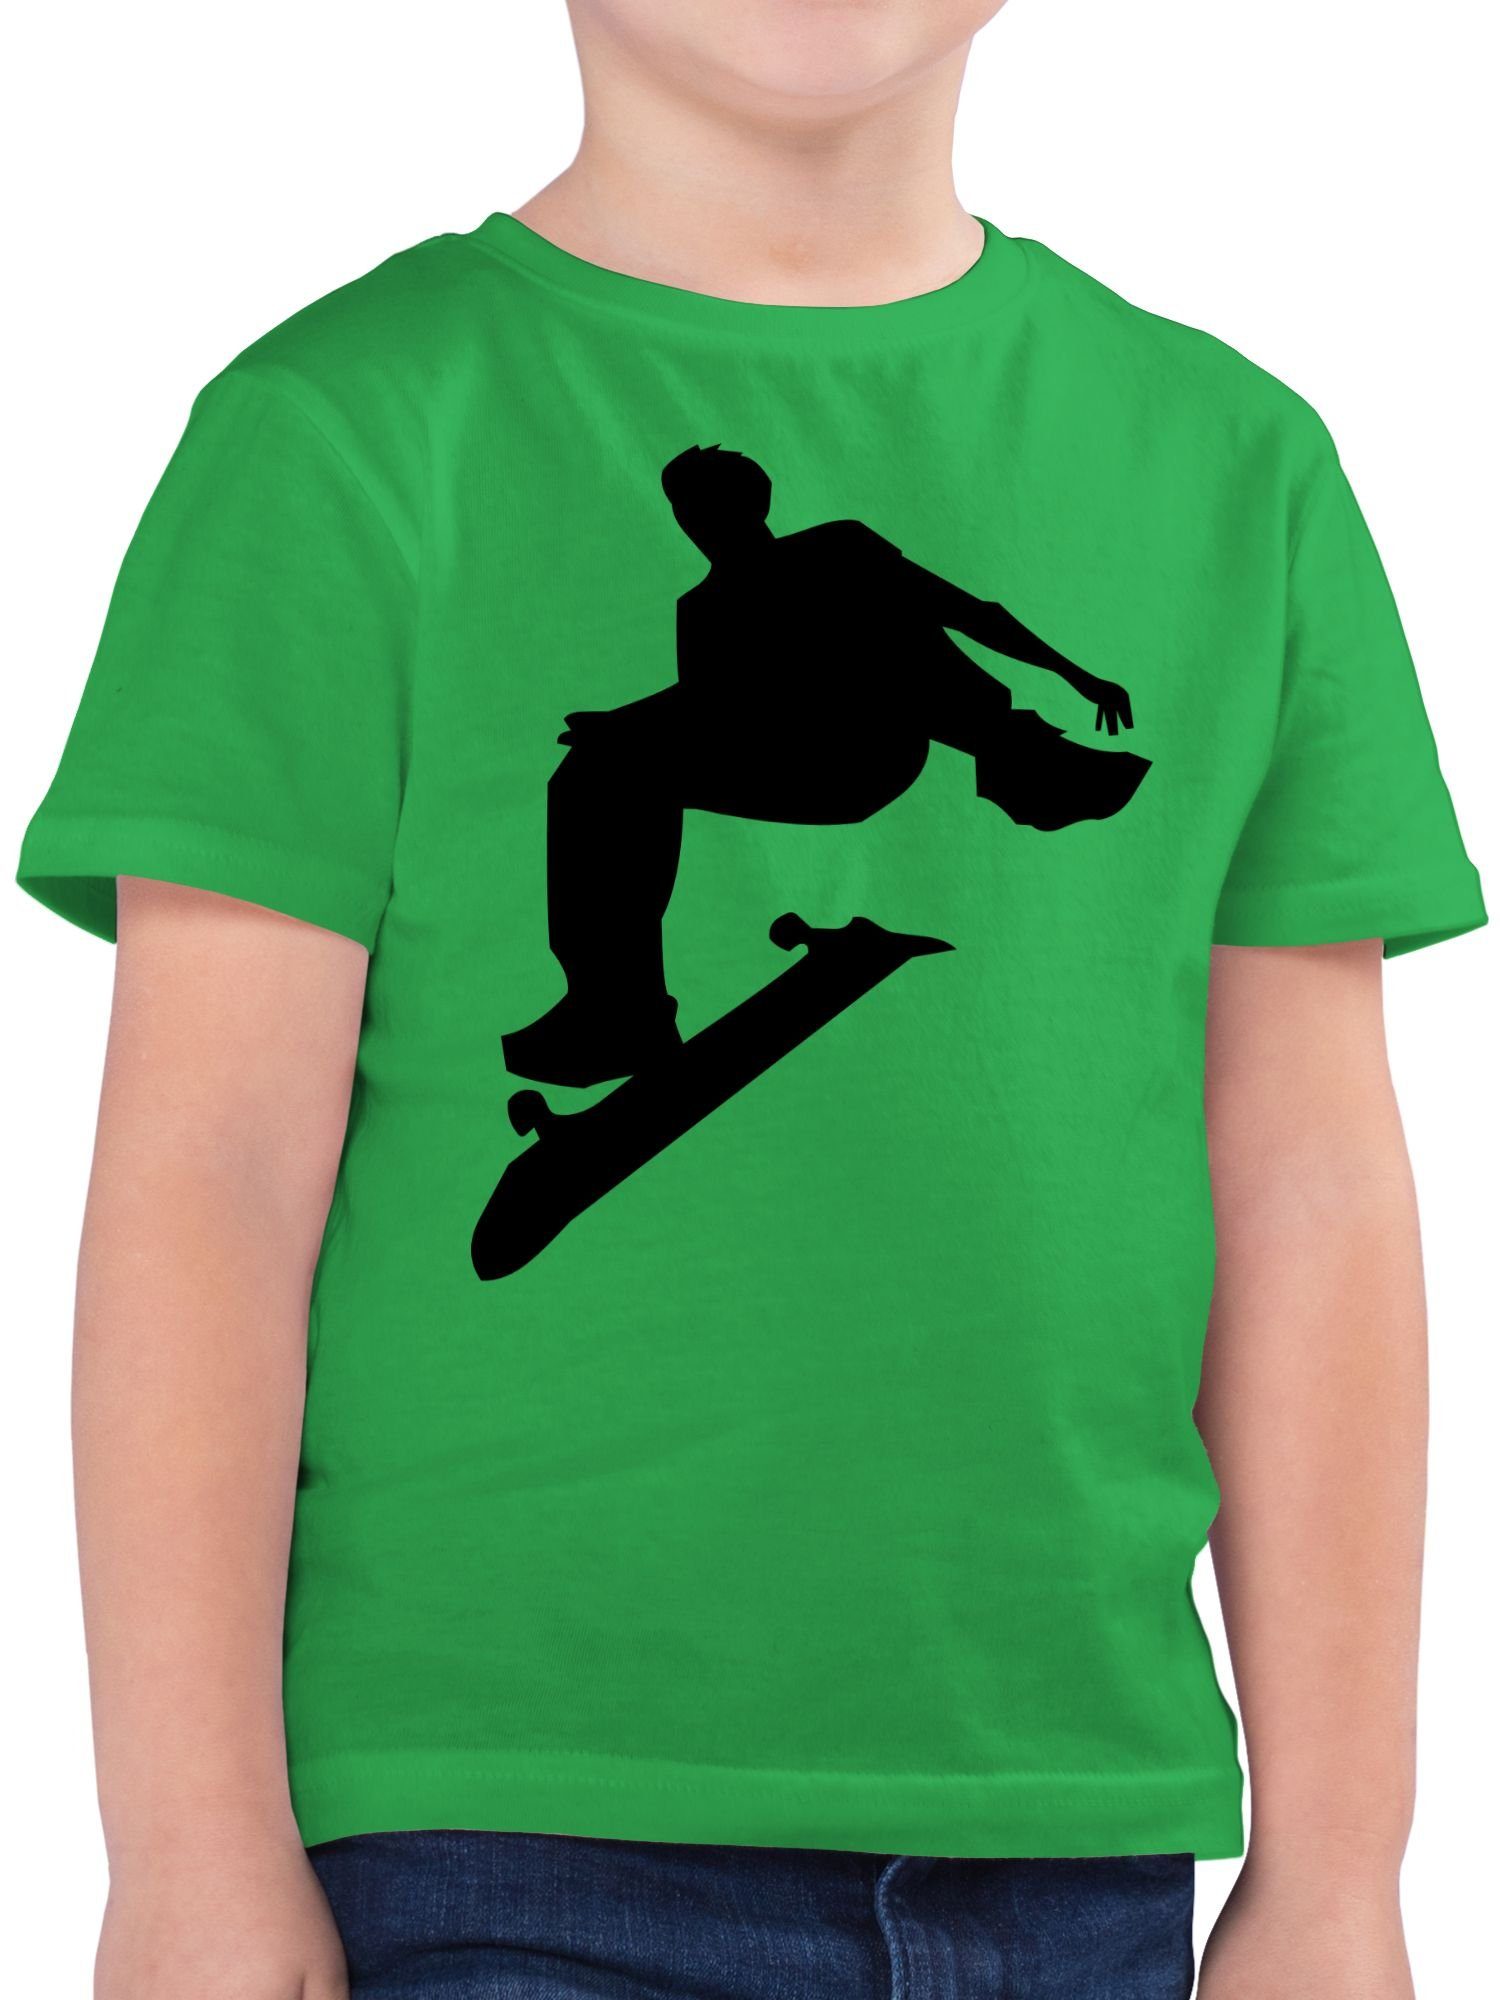 Shirtracer T-Shirt Skater Kinder Sport Kleidung 1 Grün